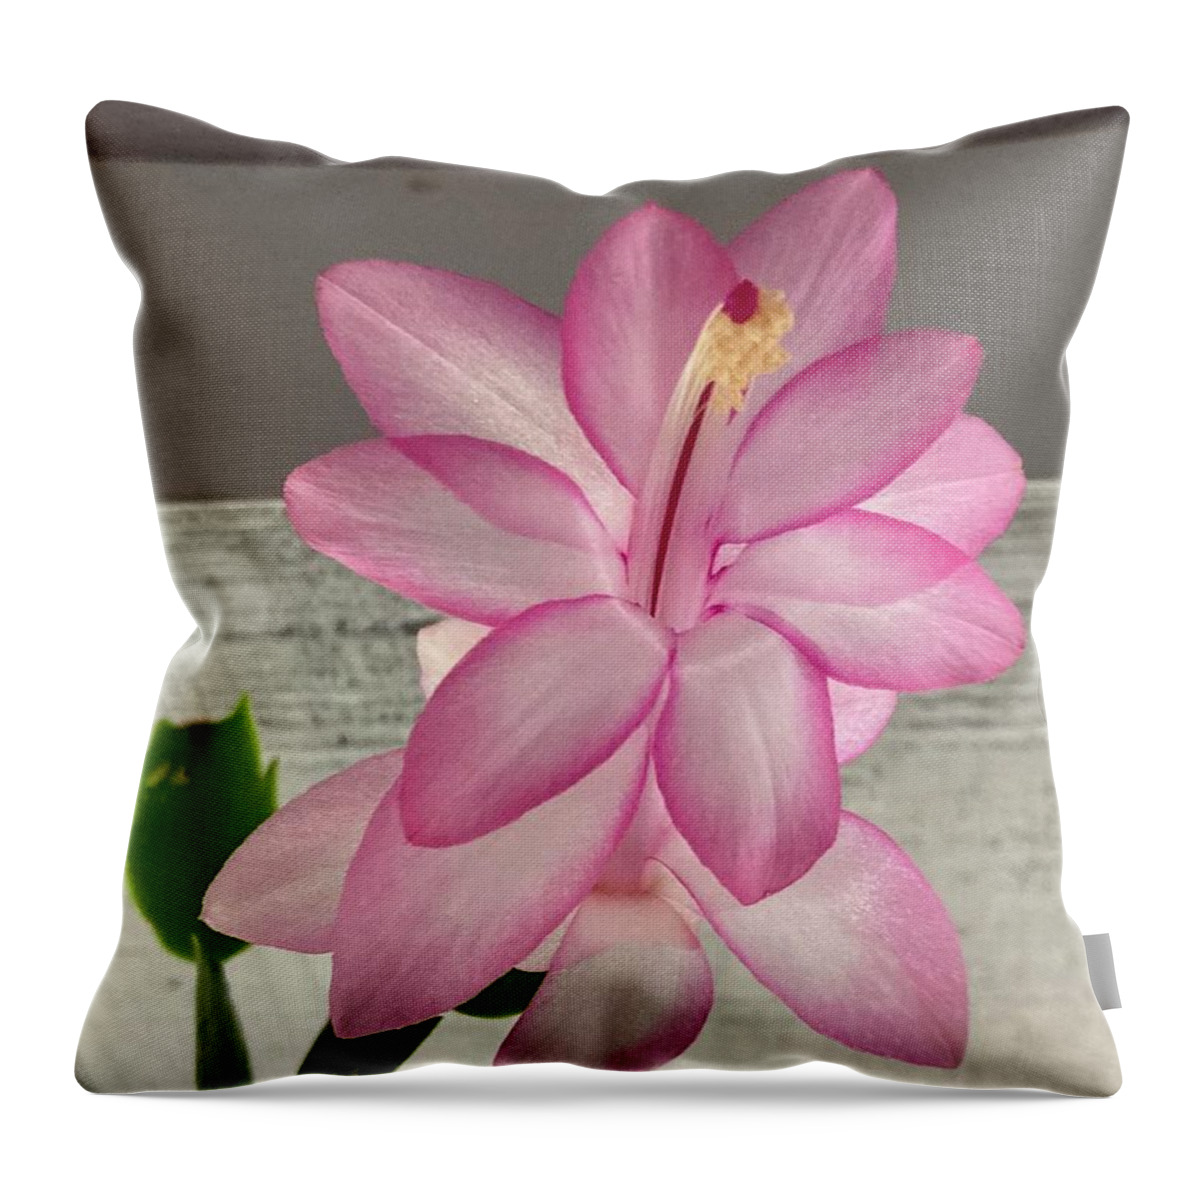 Flower Throw Pillow featuring the digital art Cactus charm by Bess Carter